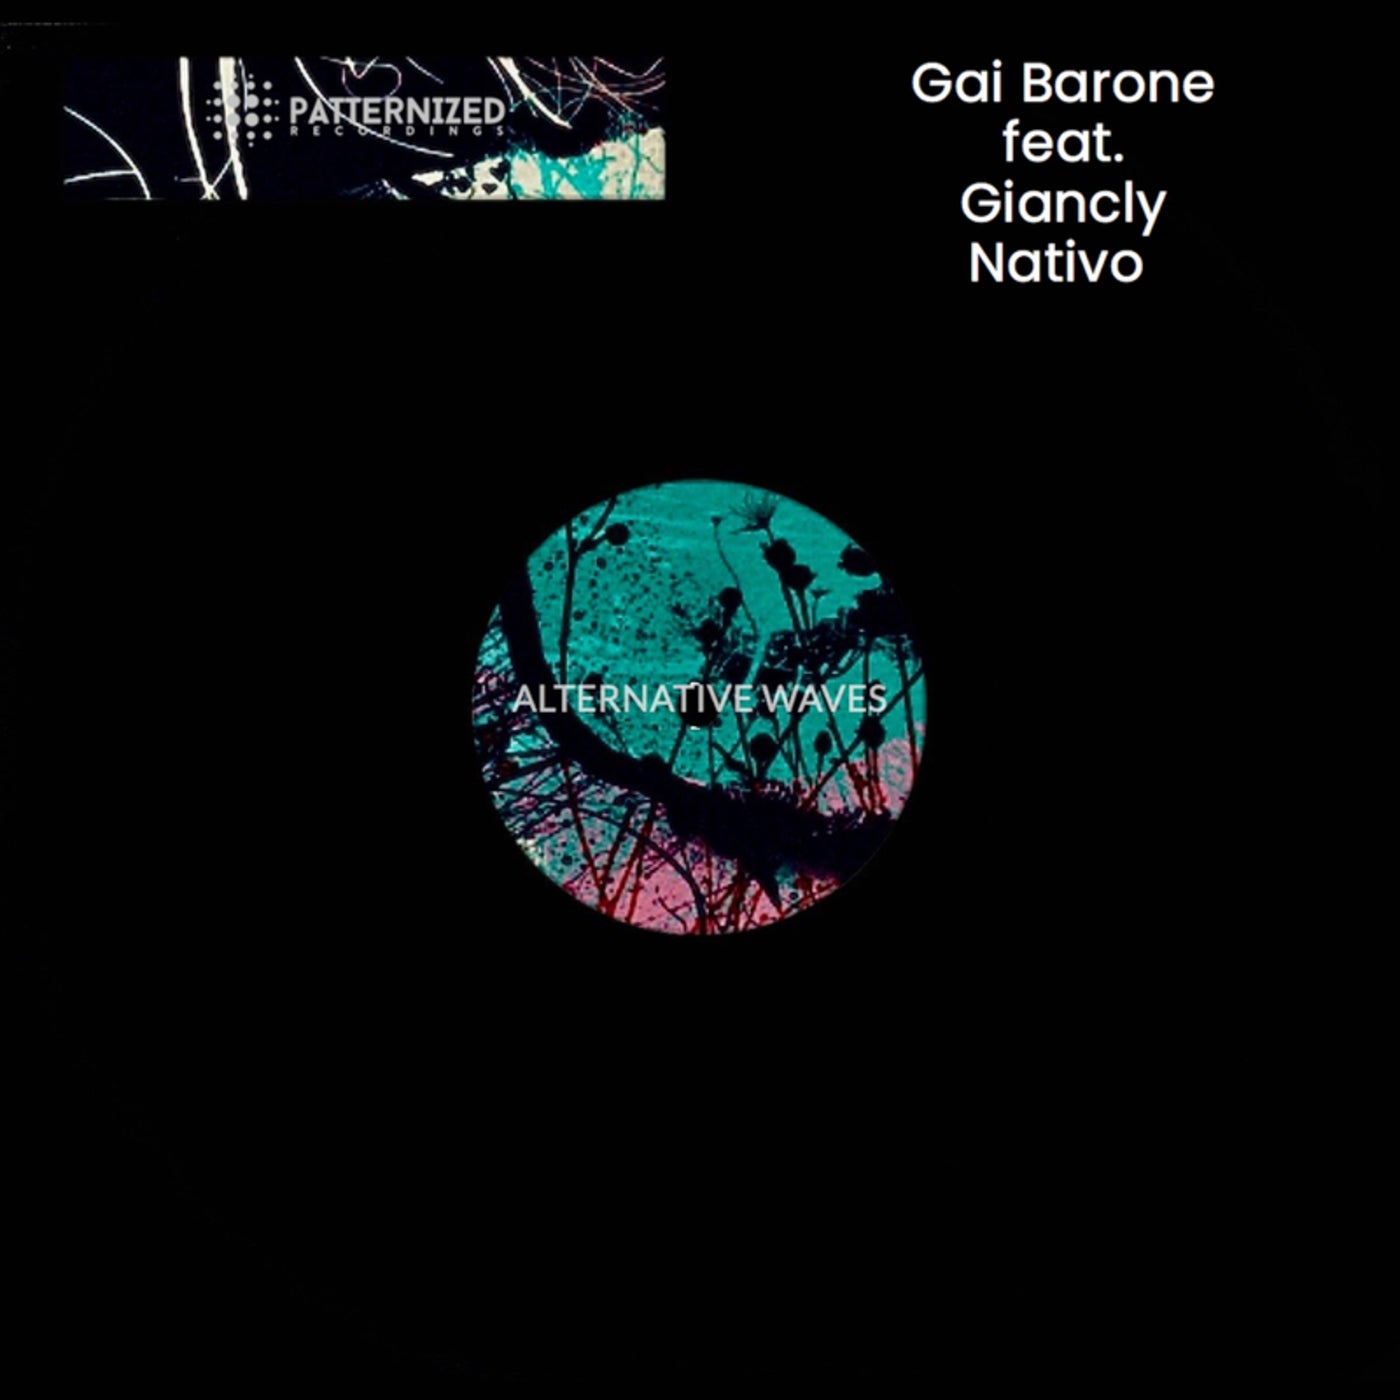 Gai Barone feat. Giancly Nativo  - Alternative Waves (Original Mix)